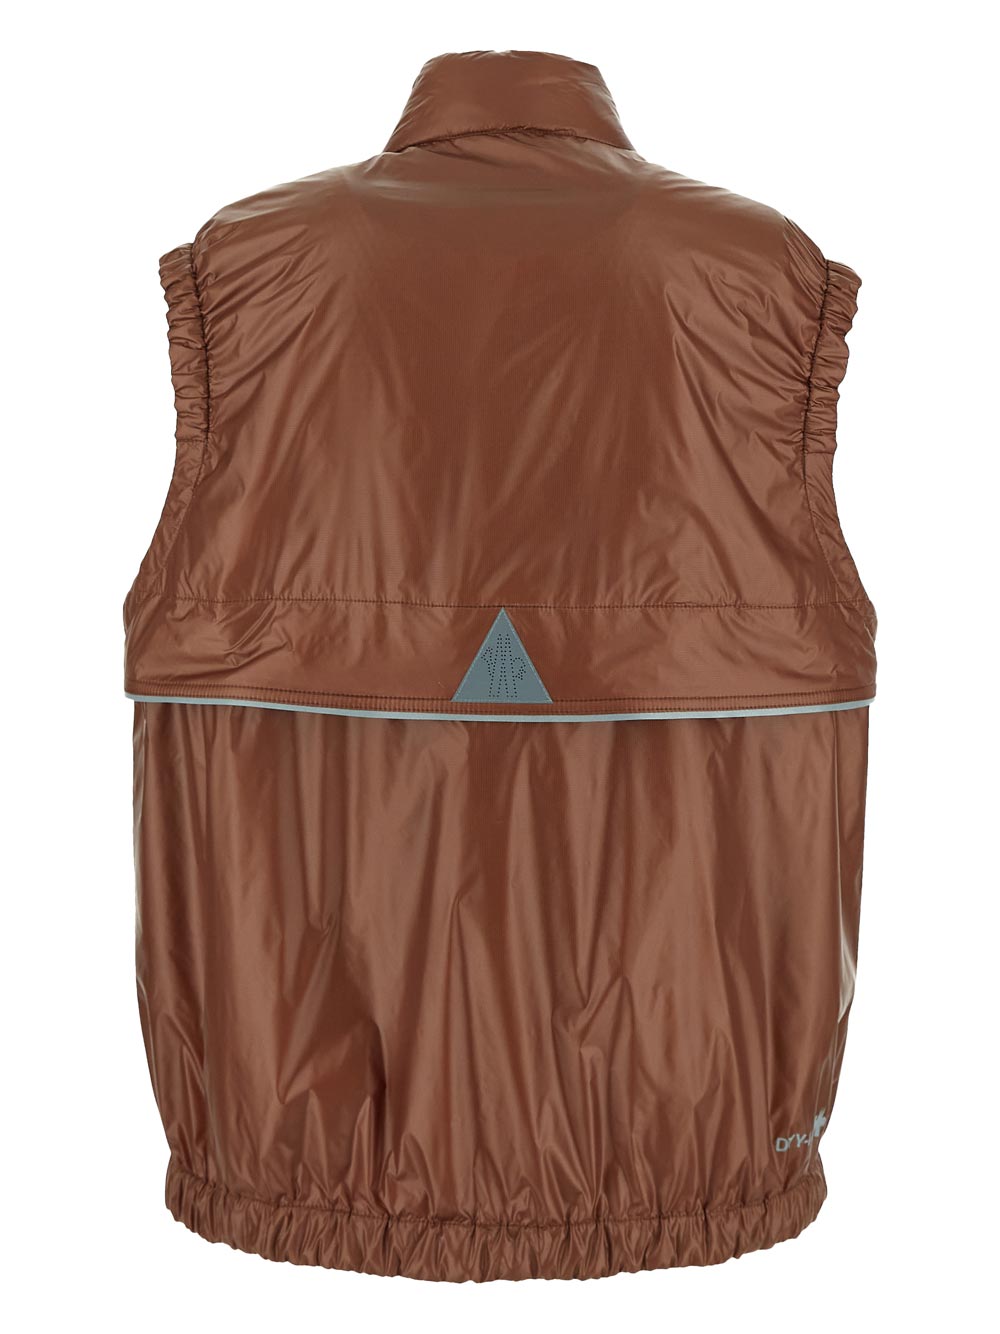 Moncler Grenoble MONCLER GRENOBLE Jacket brown 1A00014539YL271